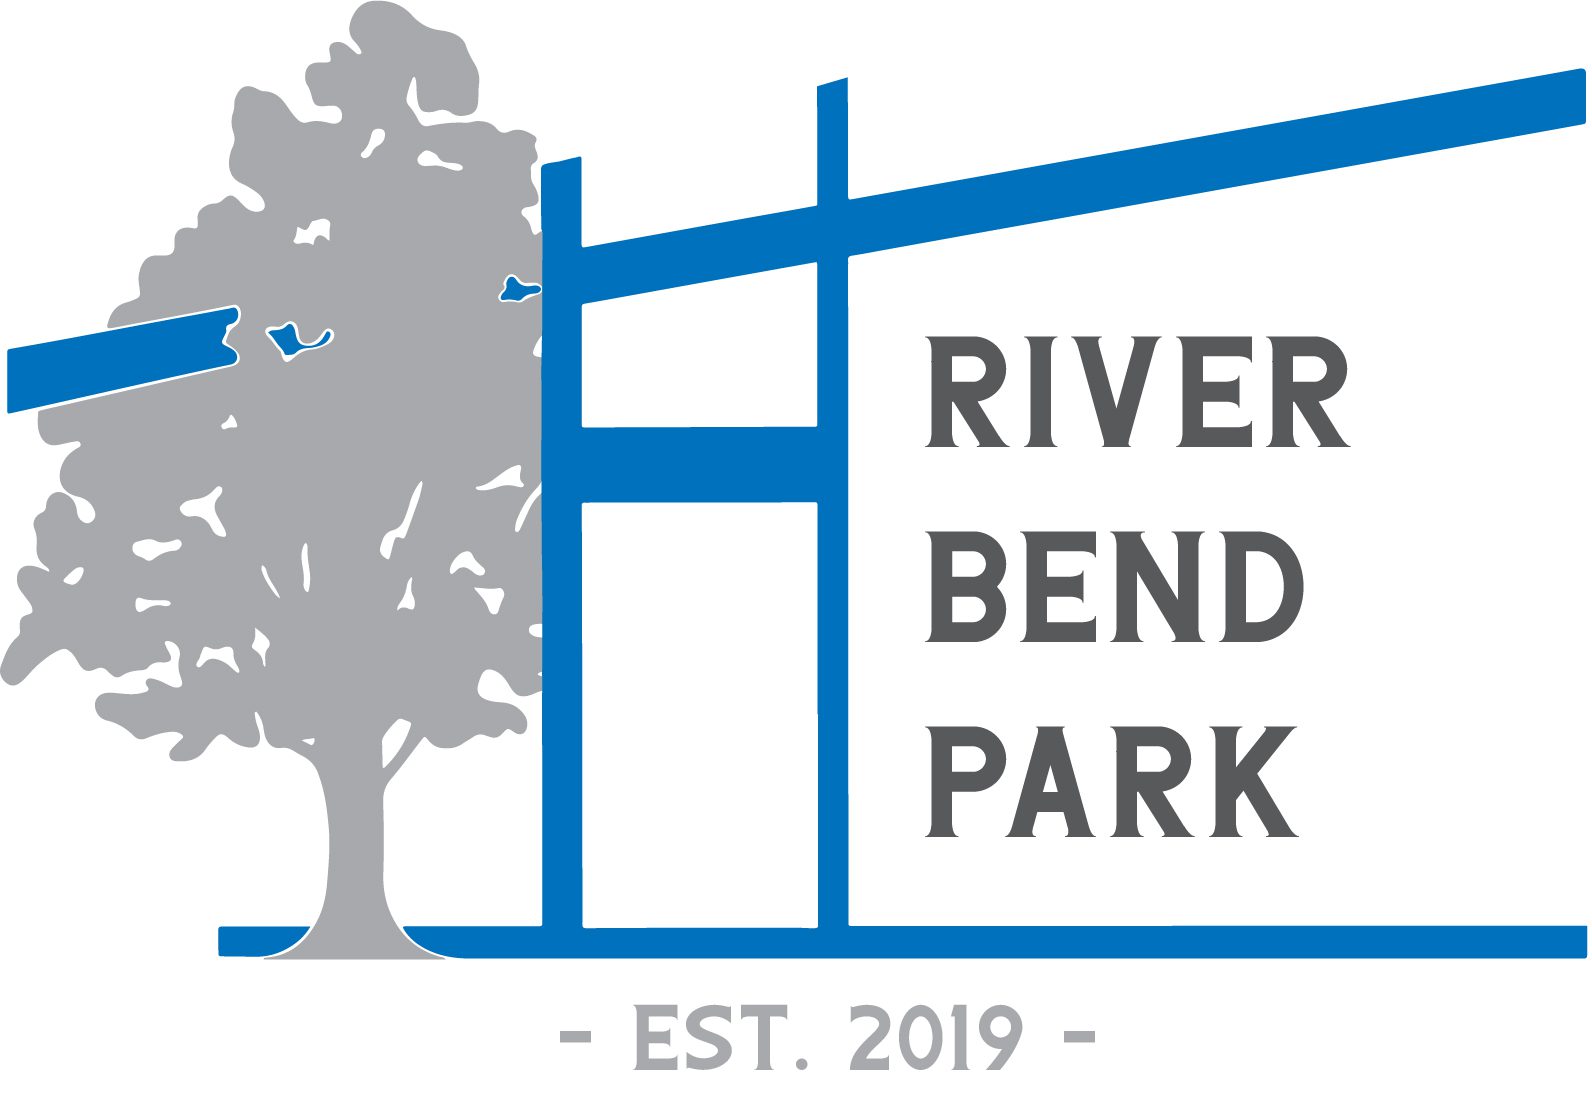 River Bend Park